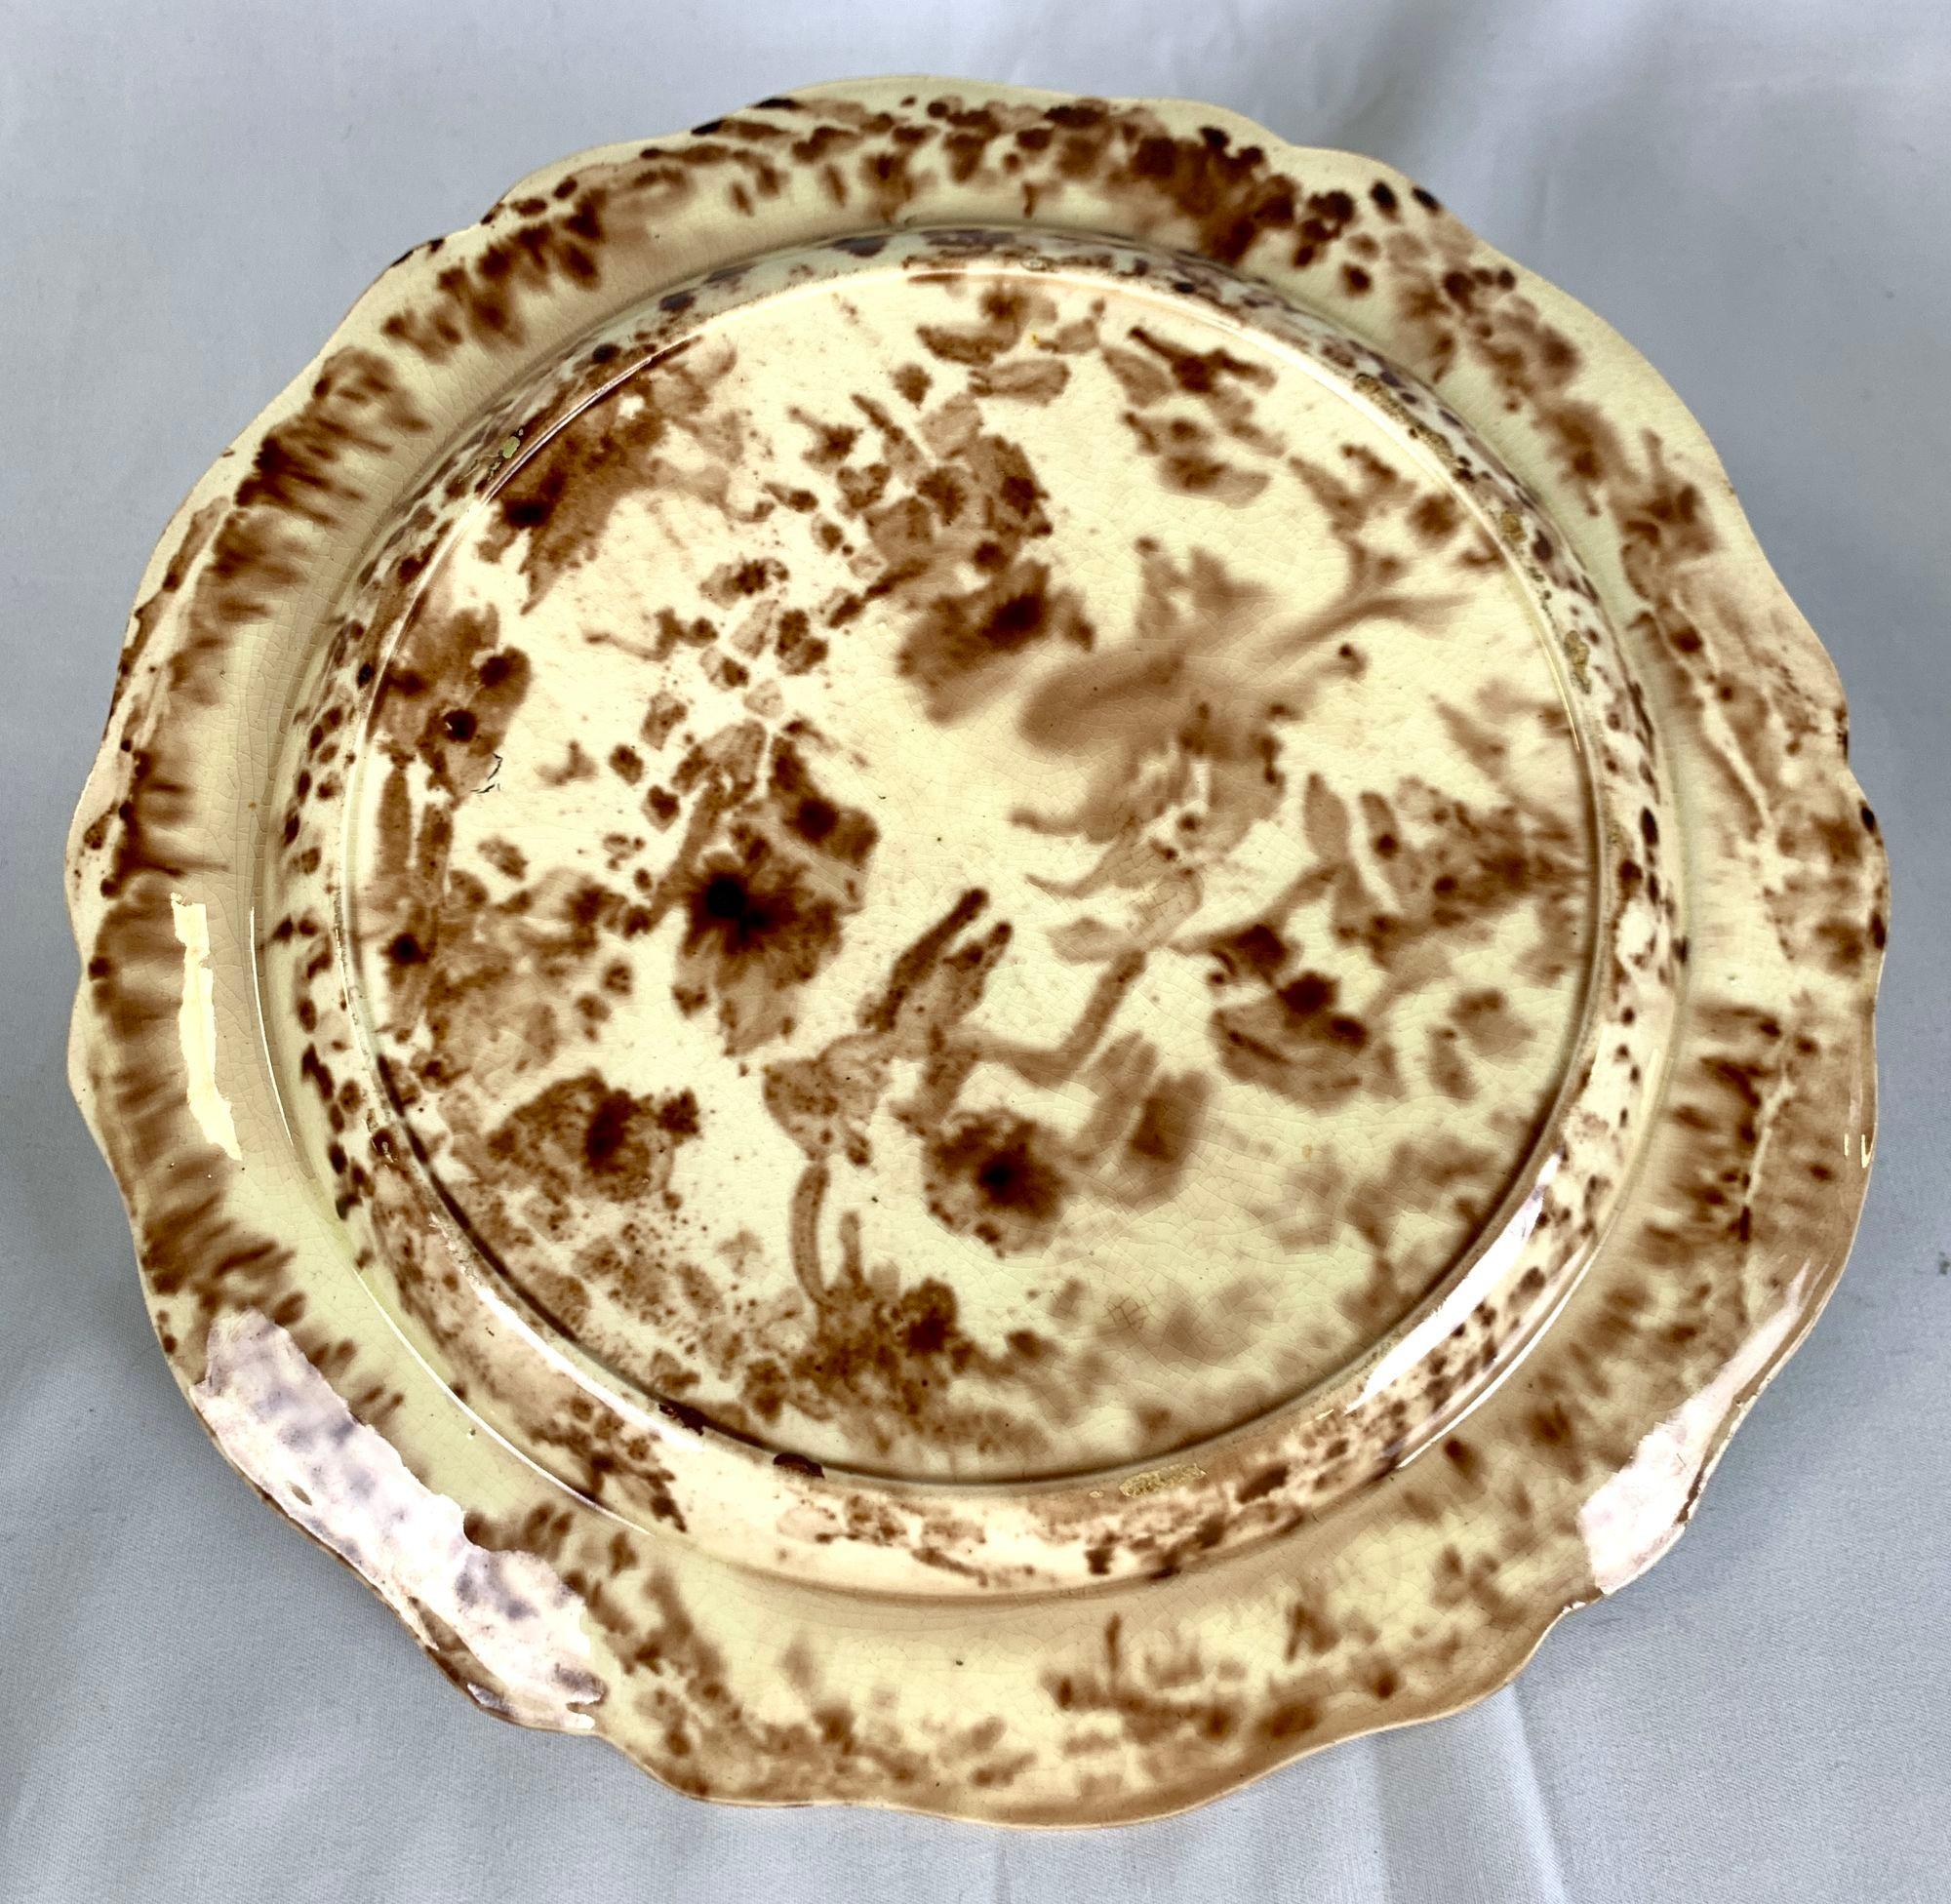 Whieldon Creamware Tortoiseshell Plate 18th Century England, Circa 1765 For Sale 1